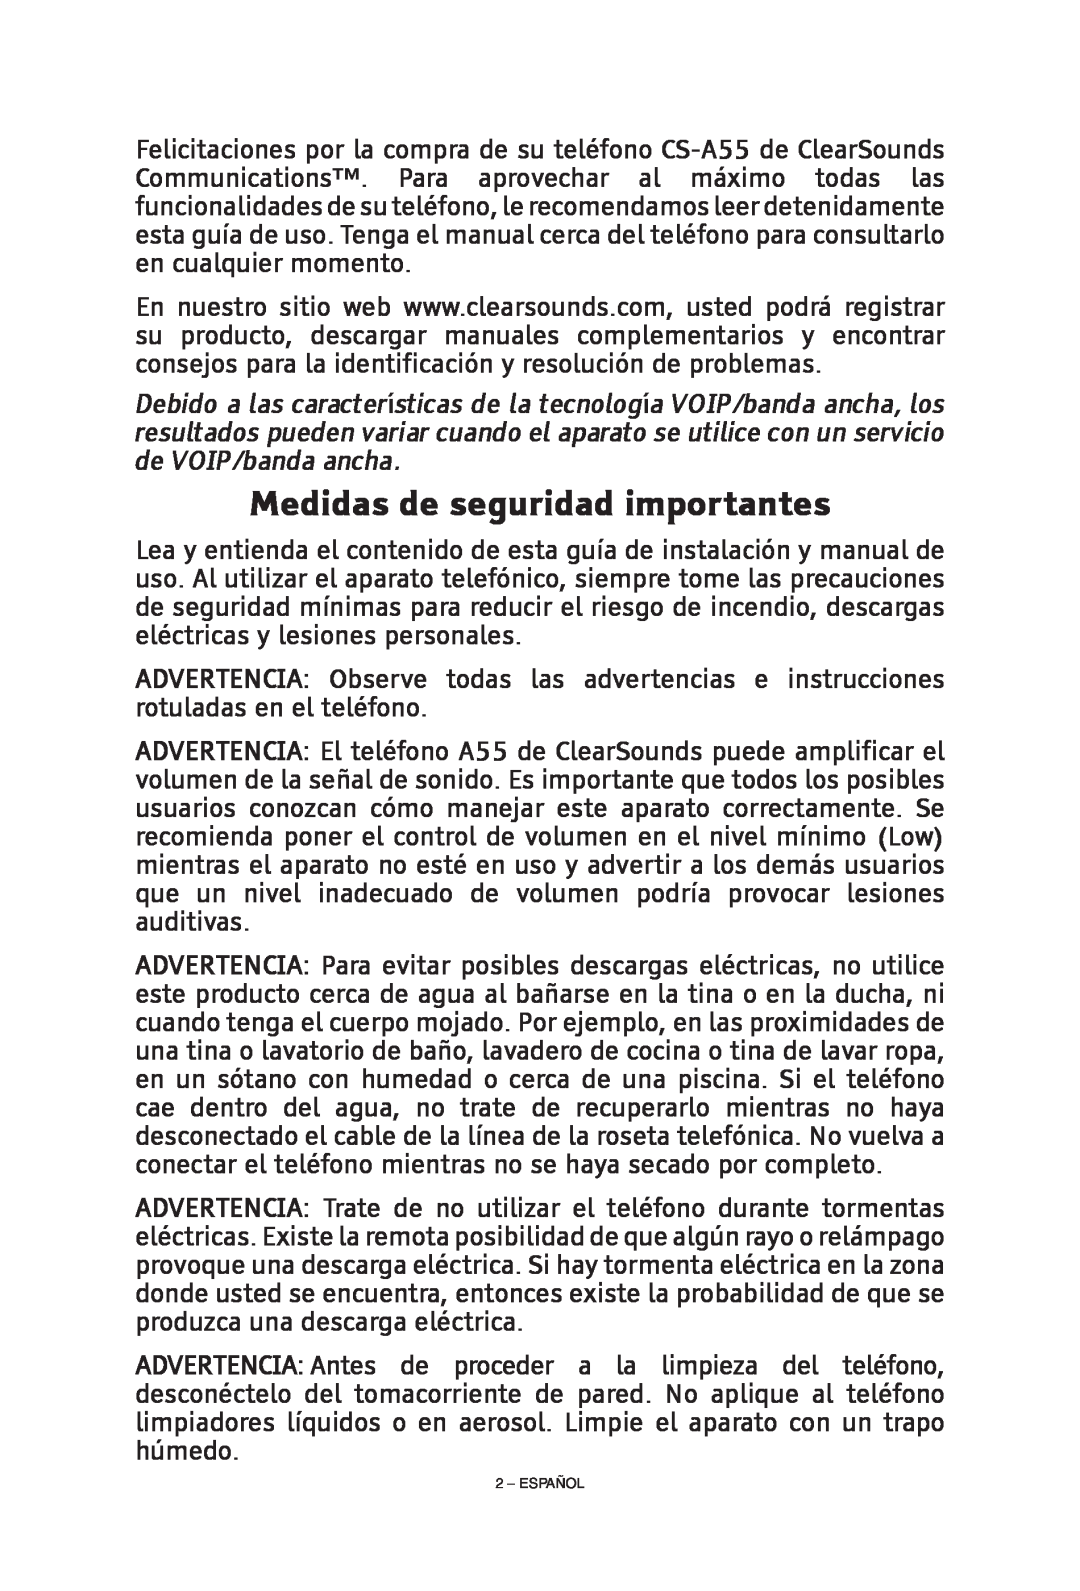 ClearSounds CS-A55 manual Medidas de seguridad importantes, Español 